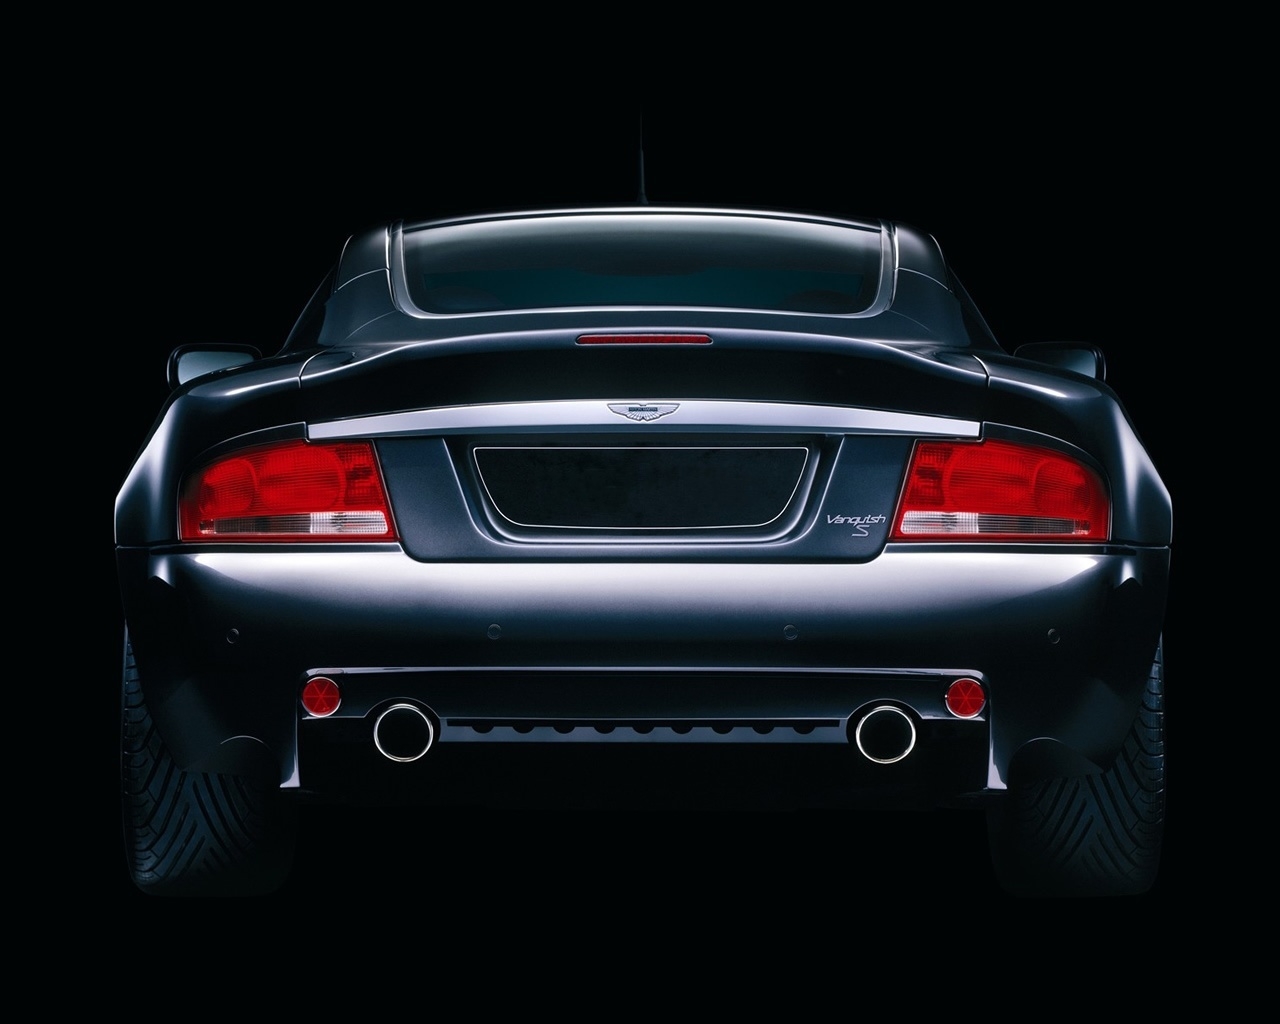 Aston Martin Vanquish Back for 1280 x 1024 resolution